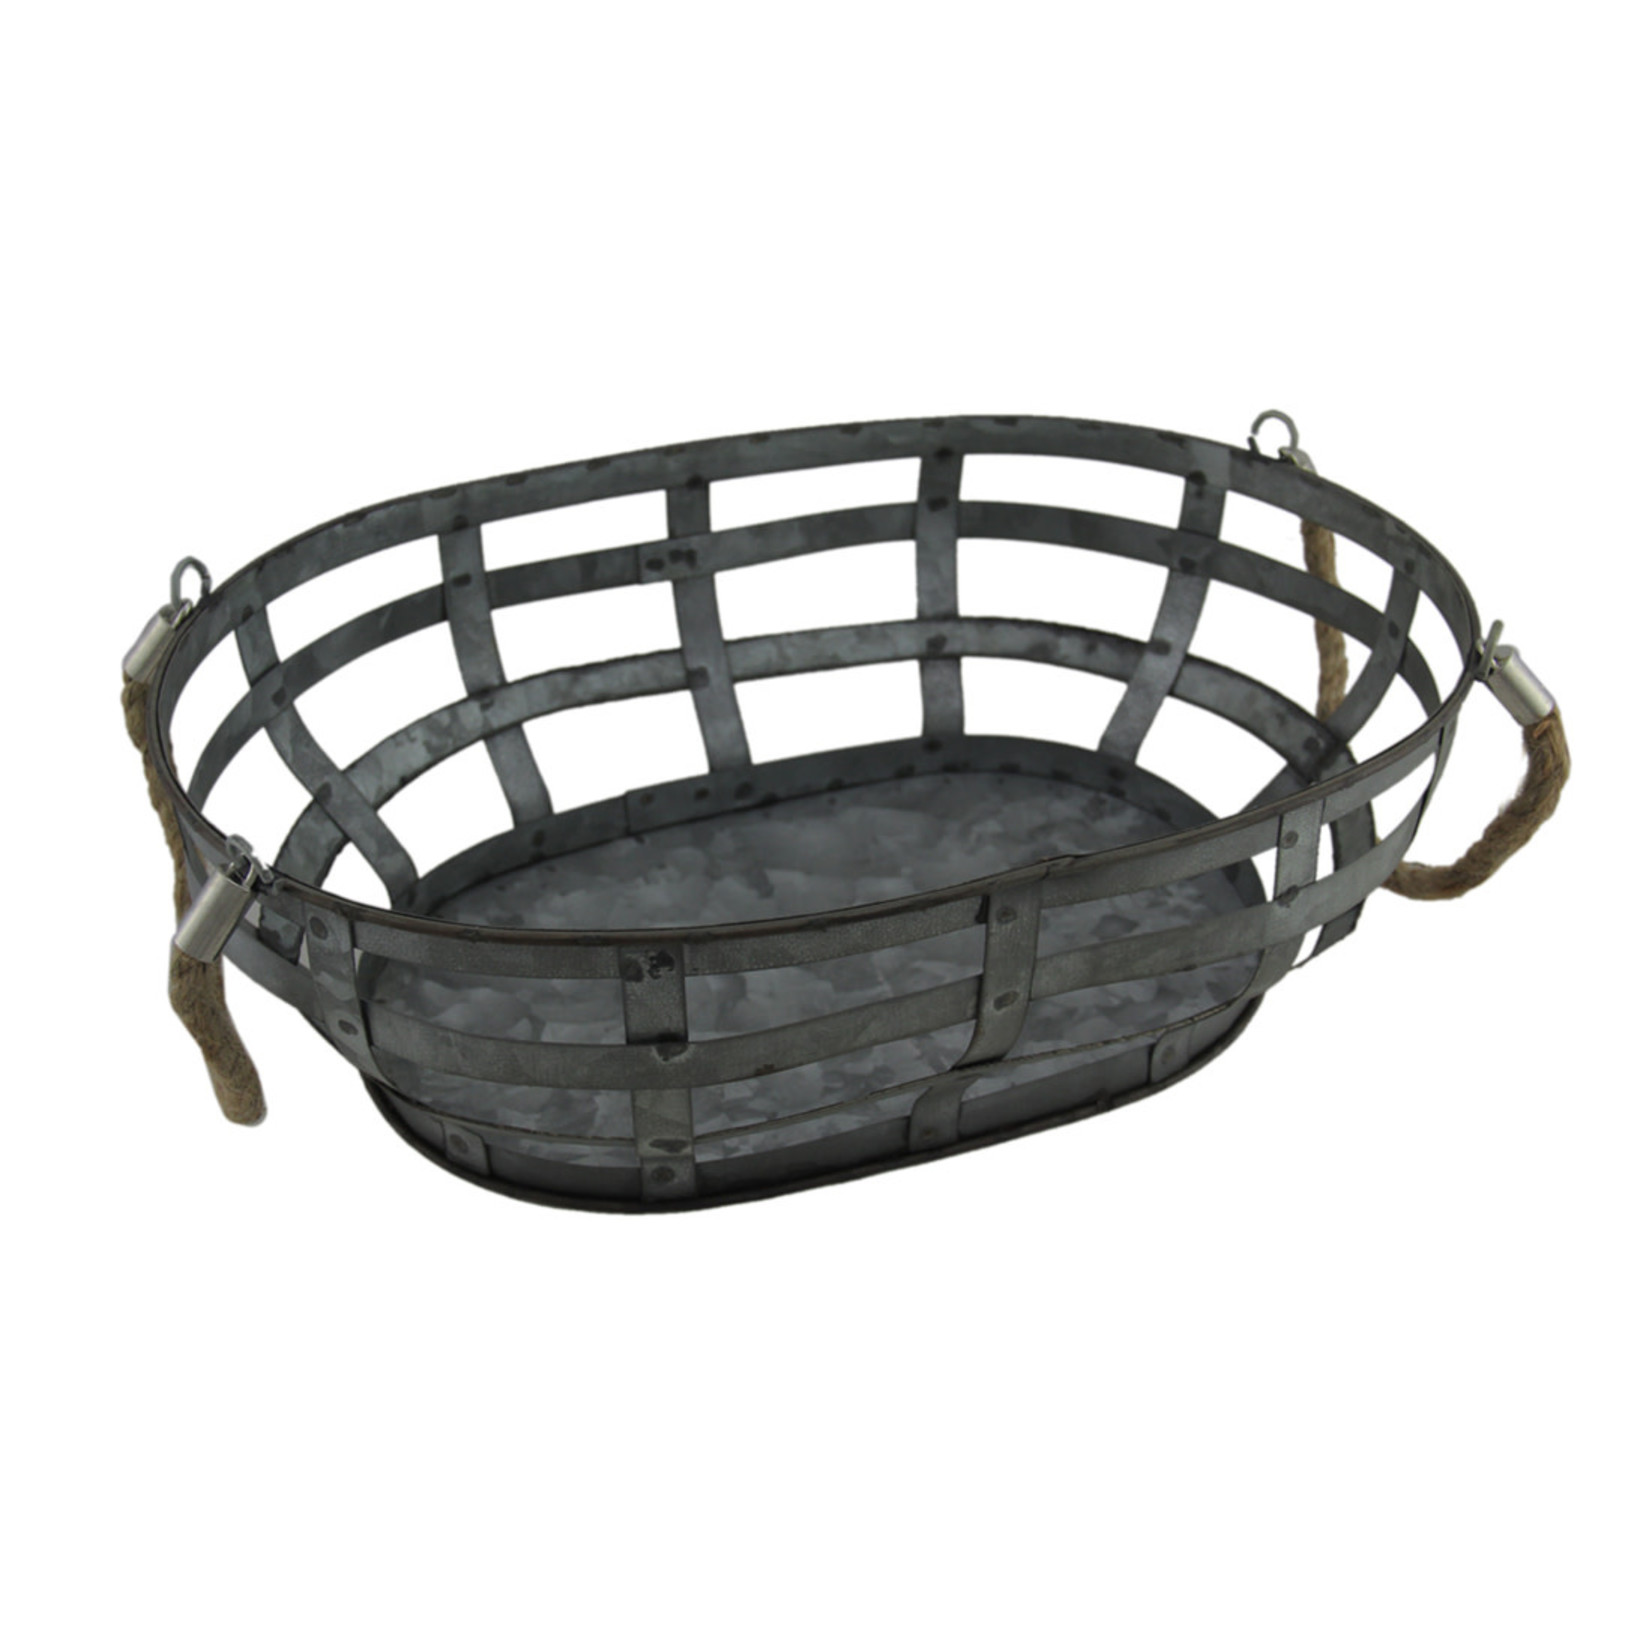 Galvanized metal basket w/handles